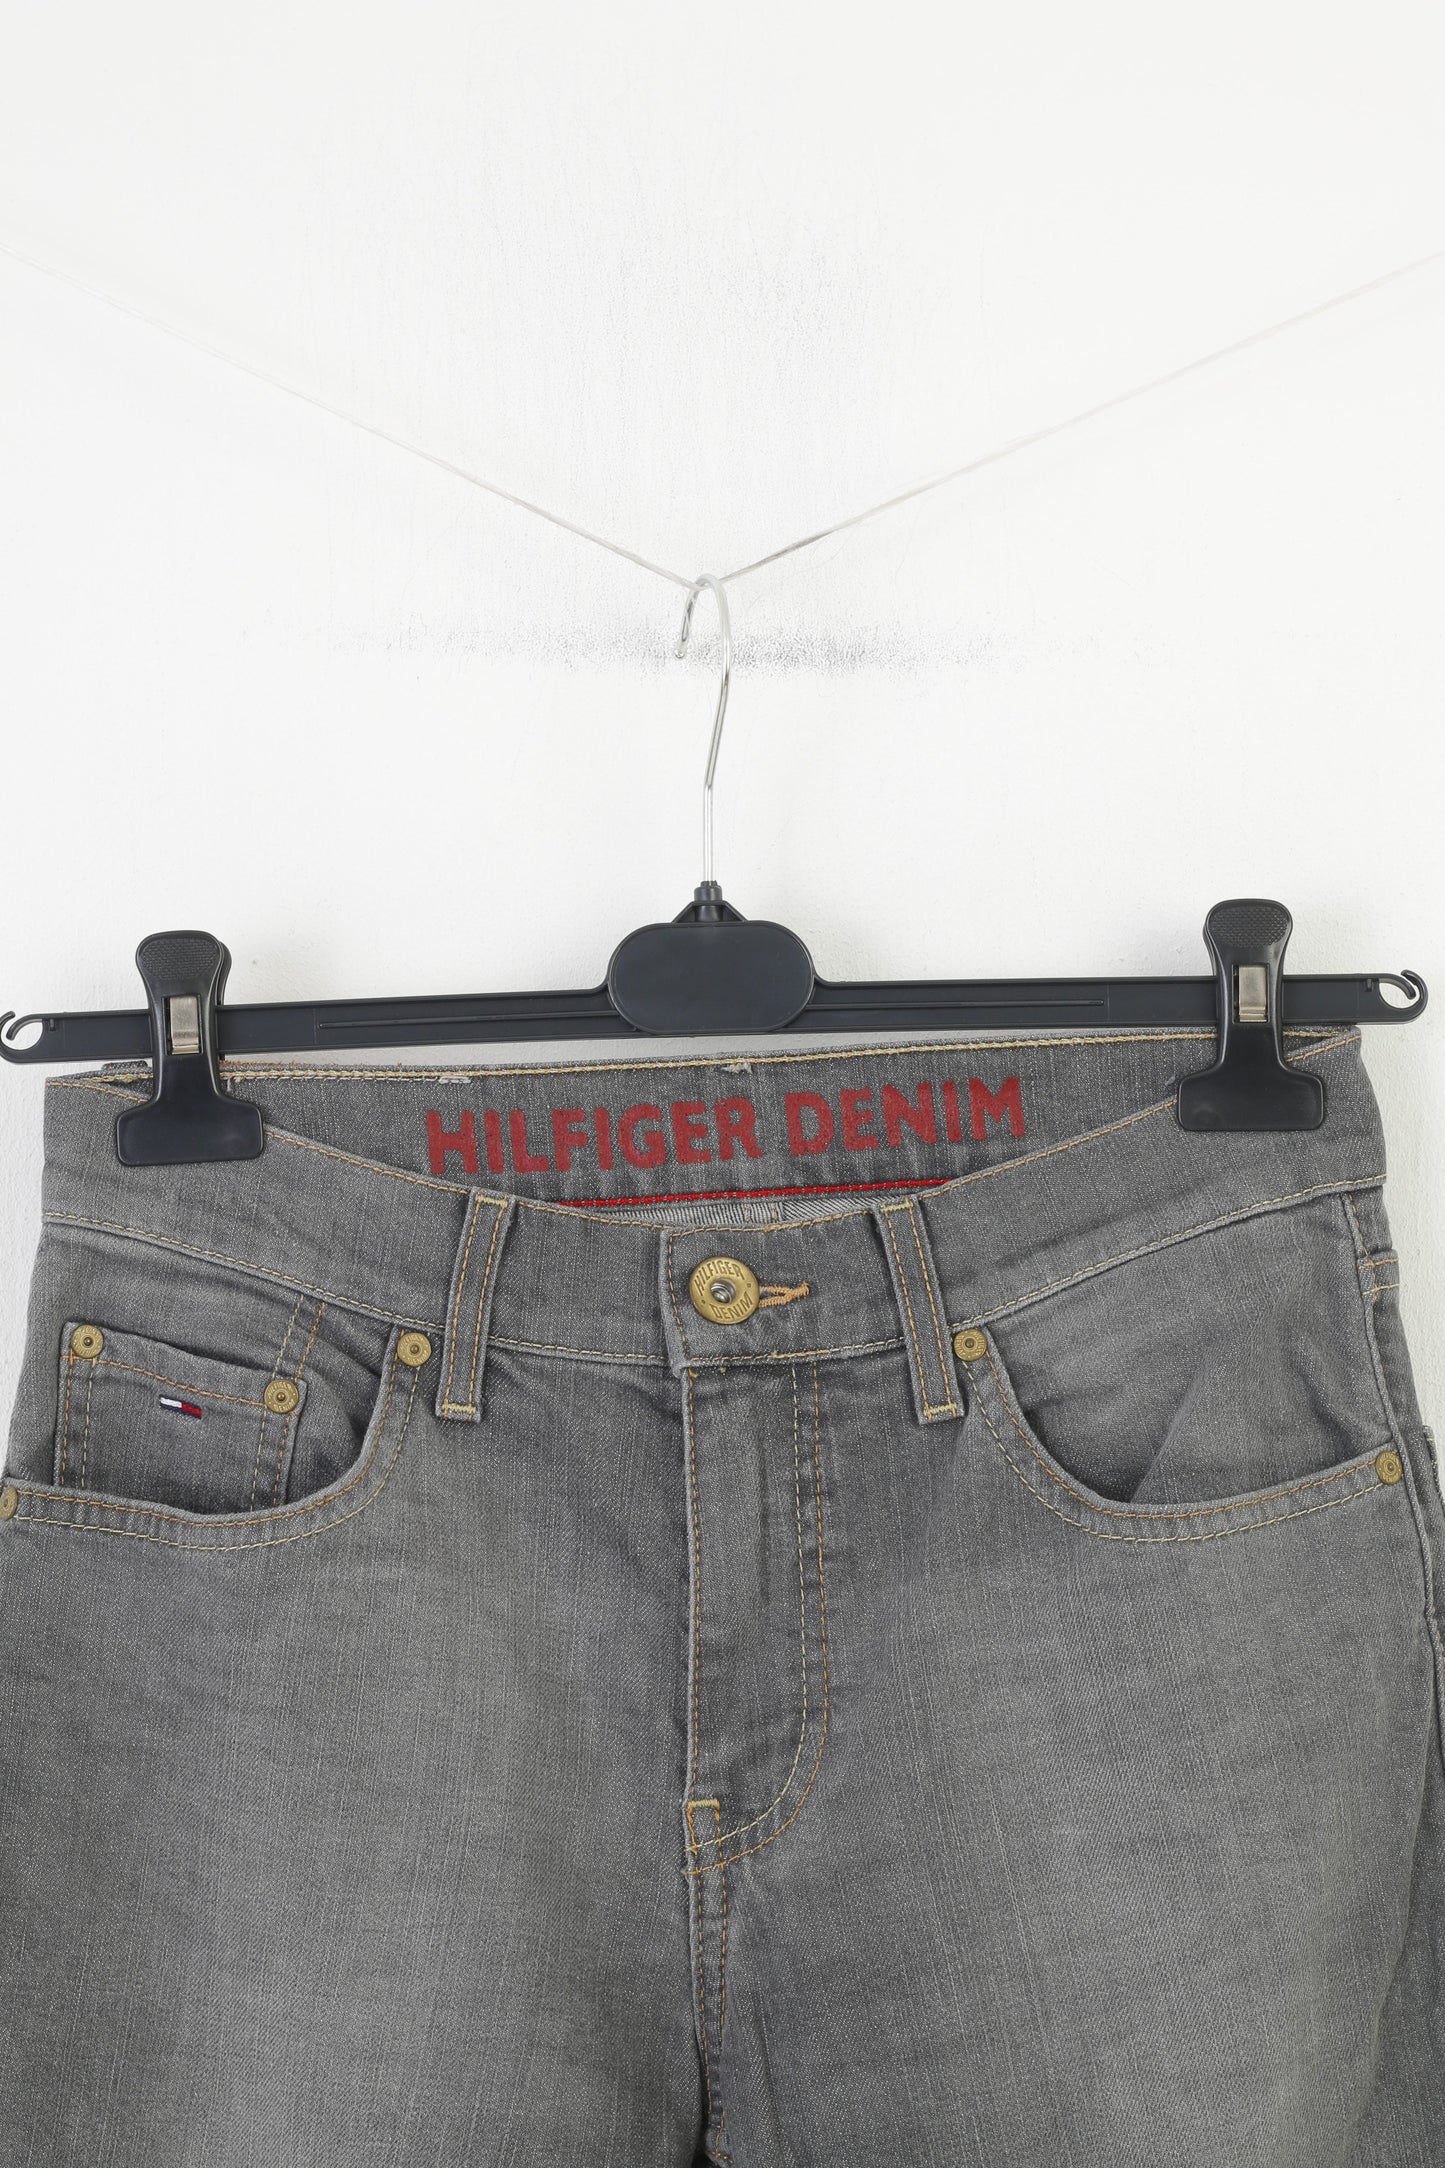 Tommy Hilfiger Women 28  Trosuers Denim Grey Jeans Stretch Wide Leg Cotton Pants